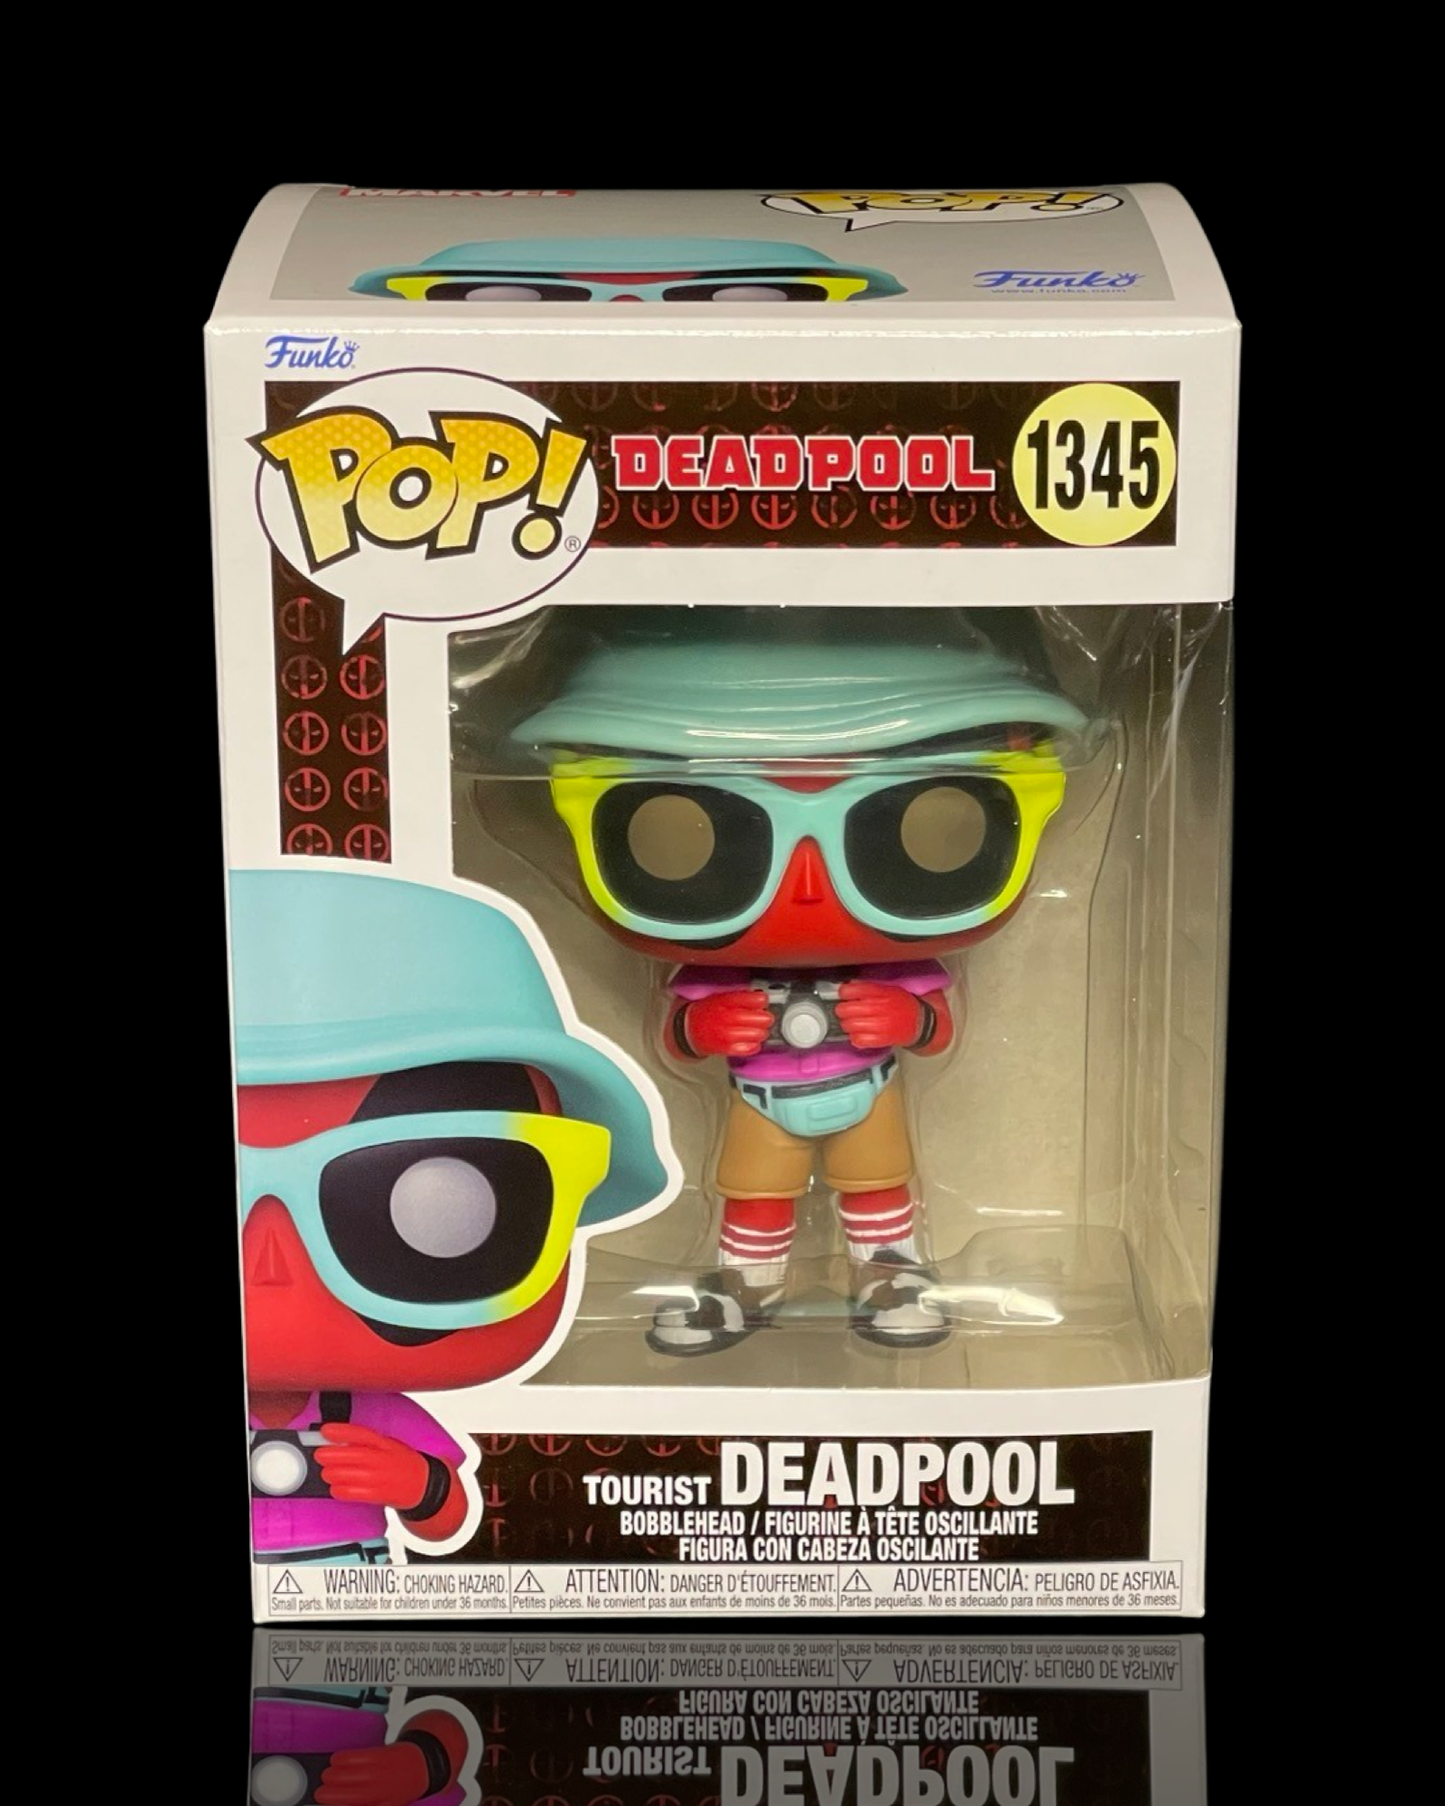 Deadpool: Tourist Deadpool